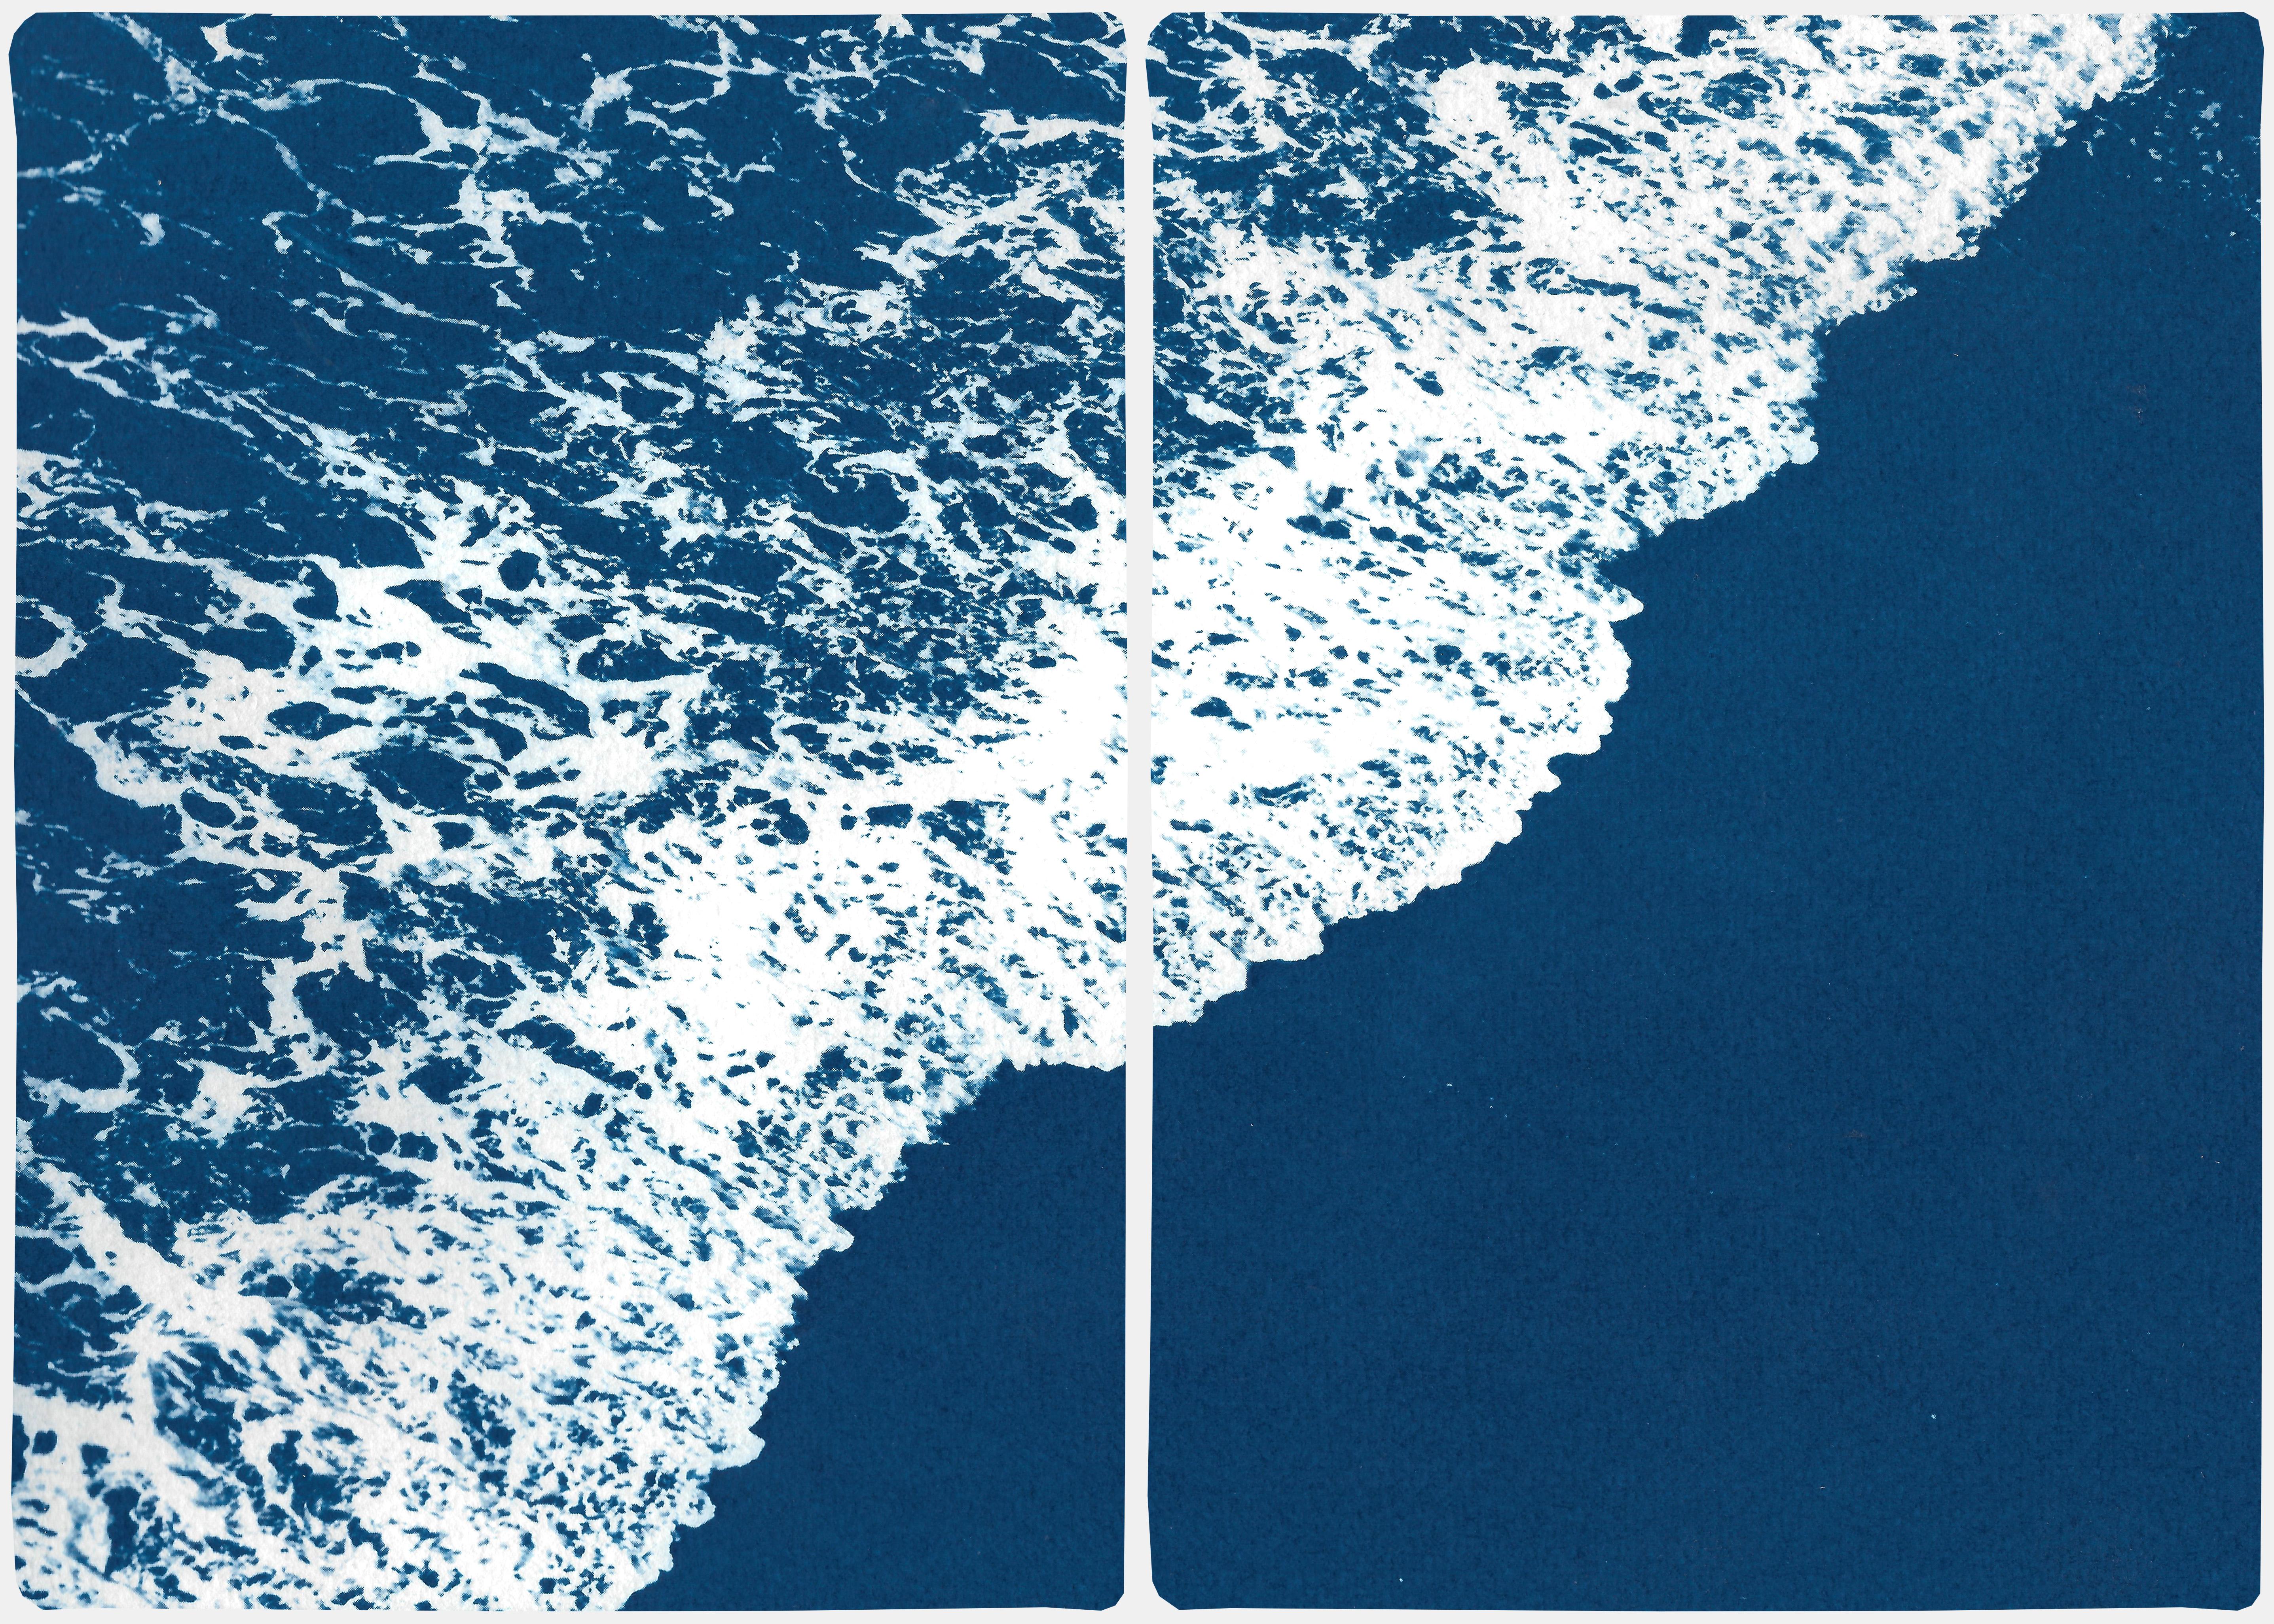 Landscape Art Kind of Cyan - Diptyque nautique de sable bleu profond, cyanotype original, paysage marin envoûtant